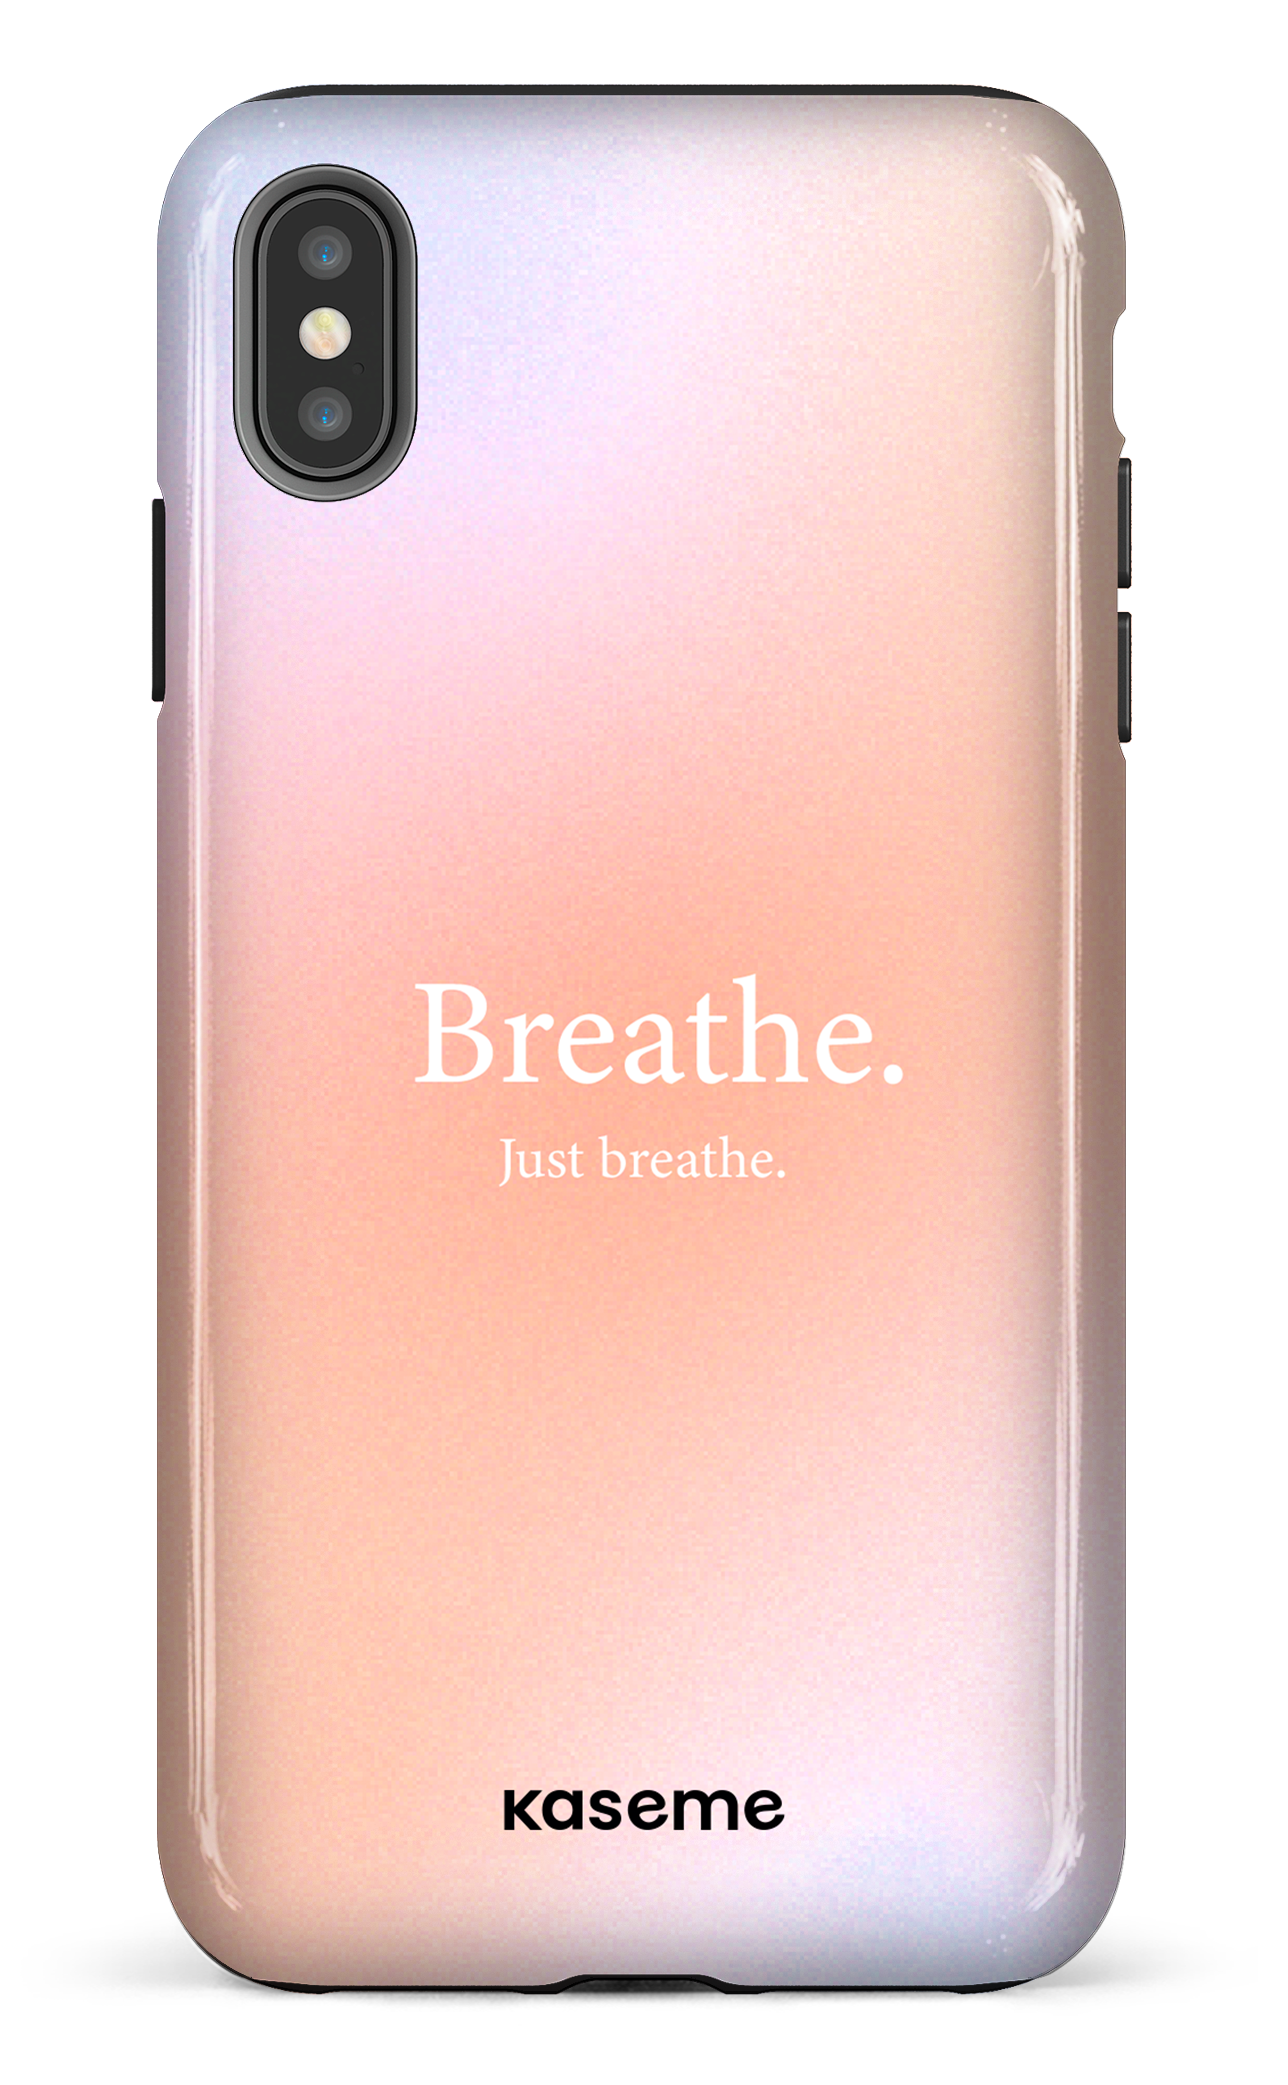 Just breathe - iPhone XS Max